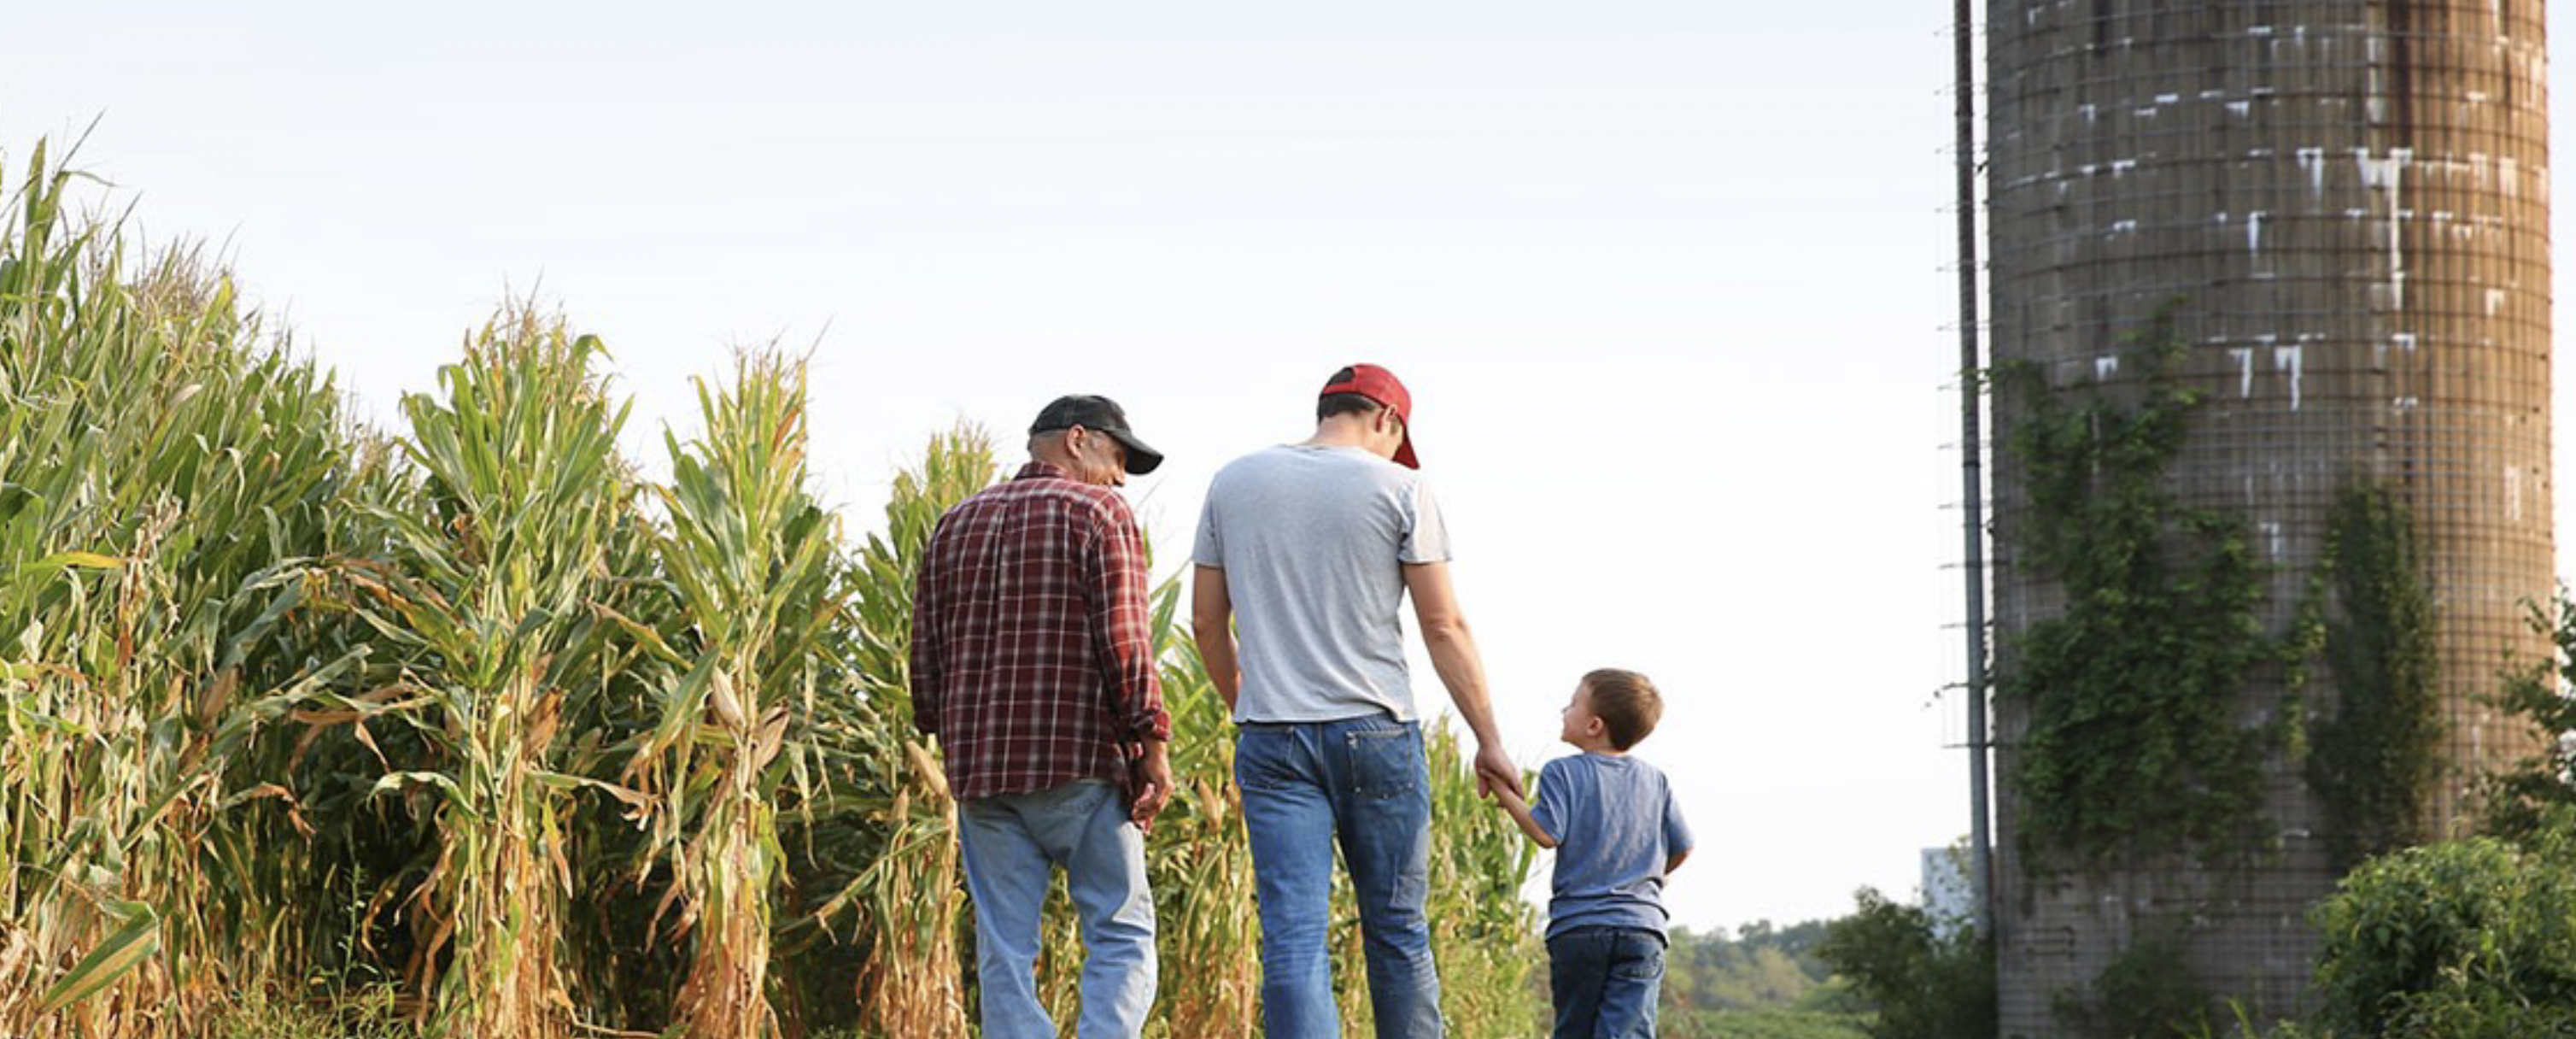 Rural Farming Family